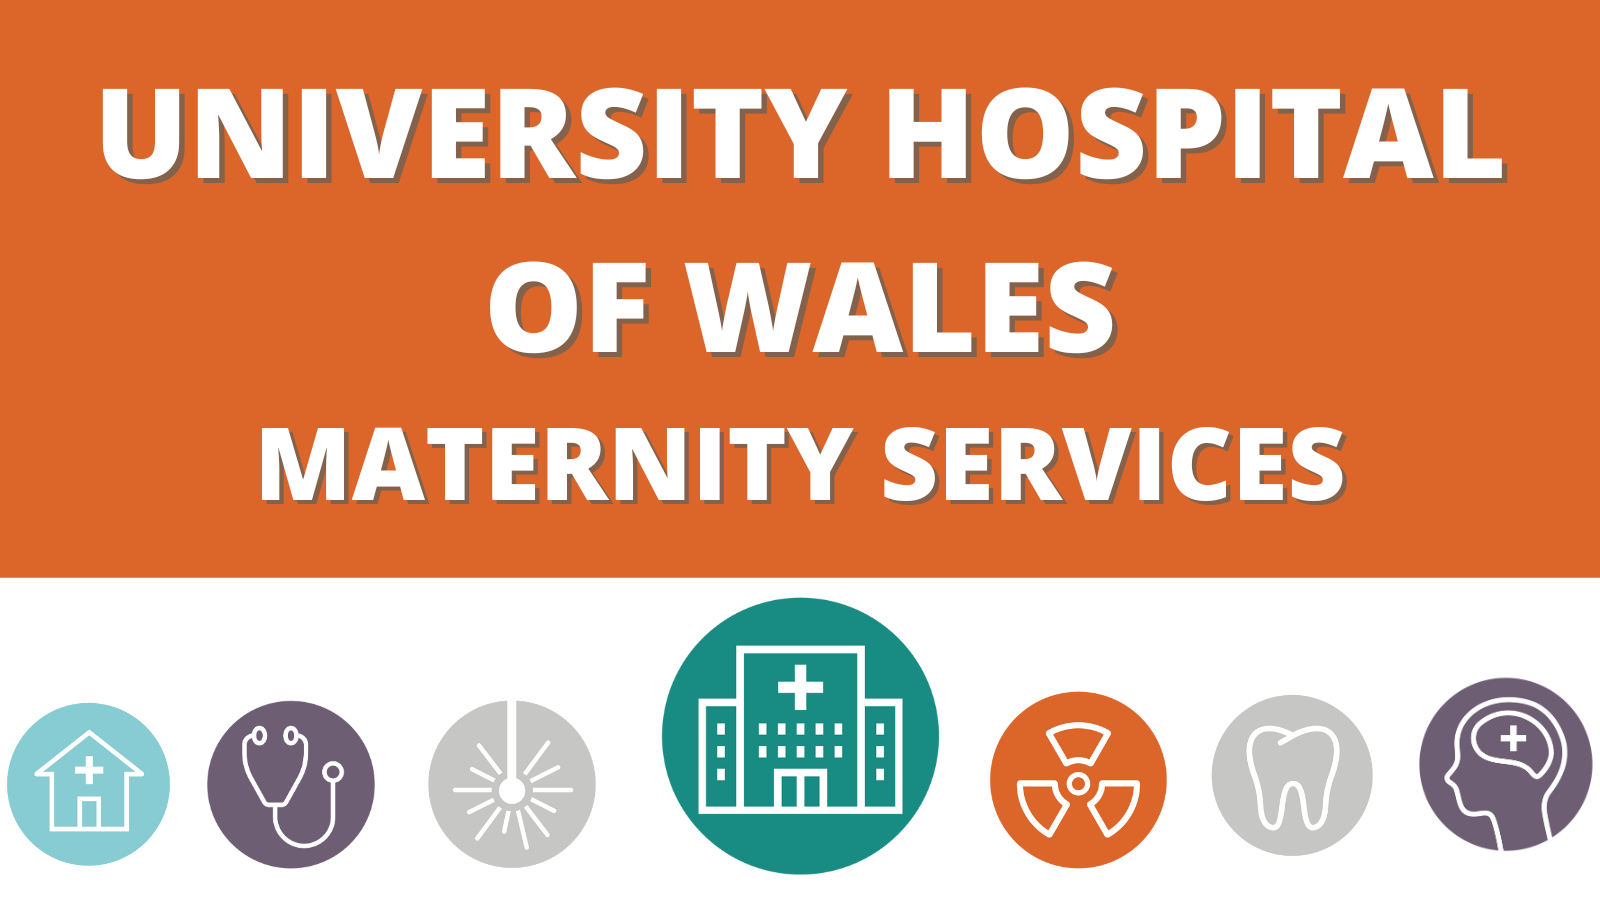 University Hospital of Wales - Maternity services 